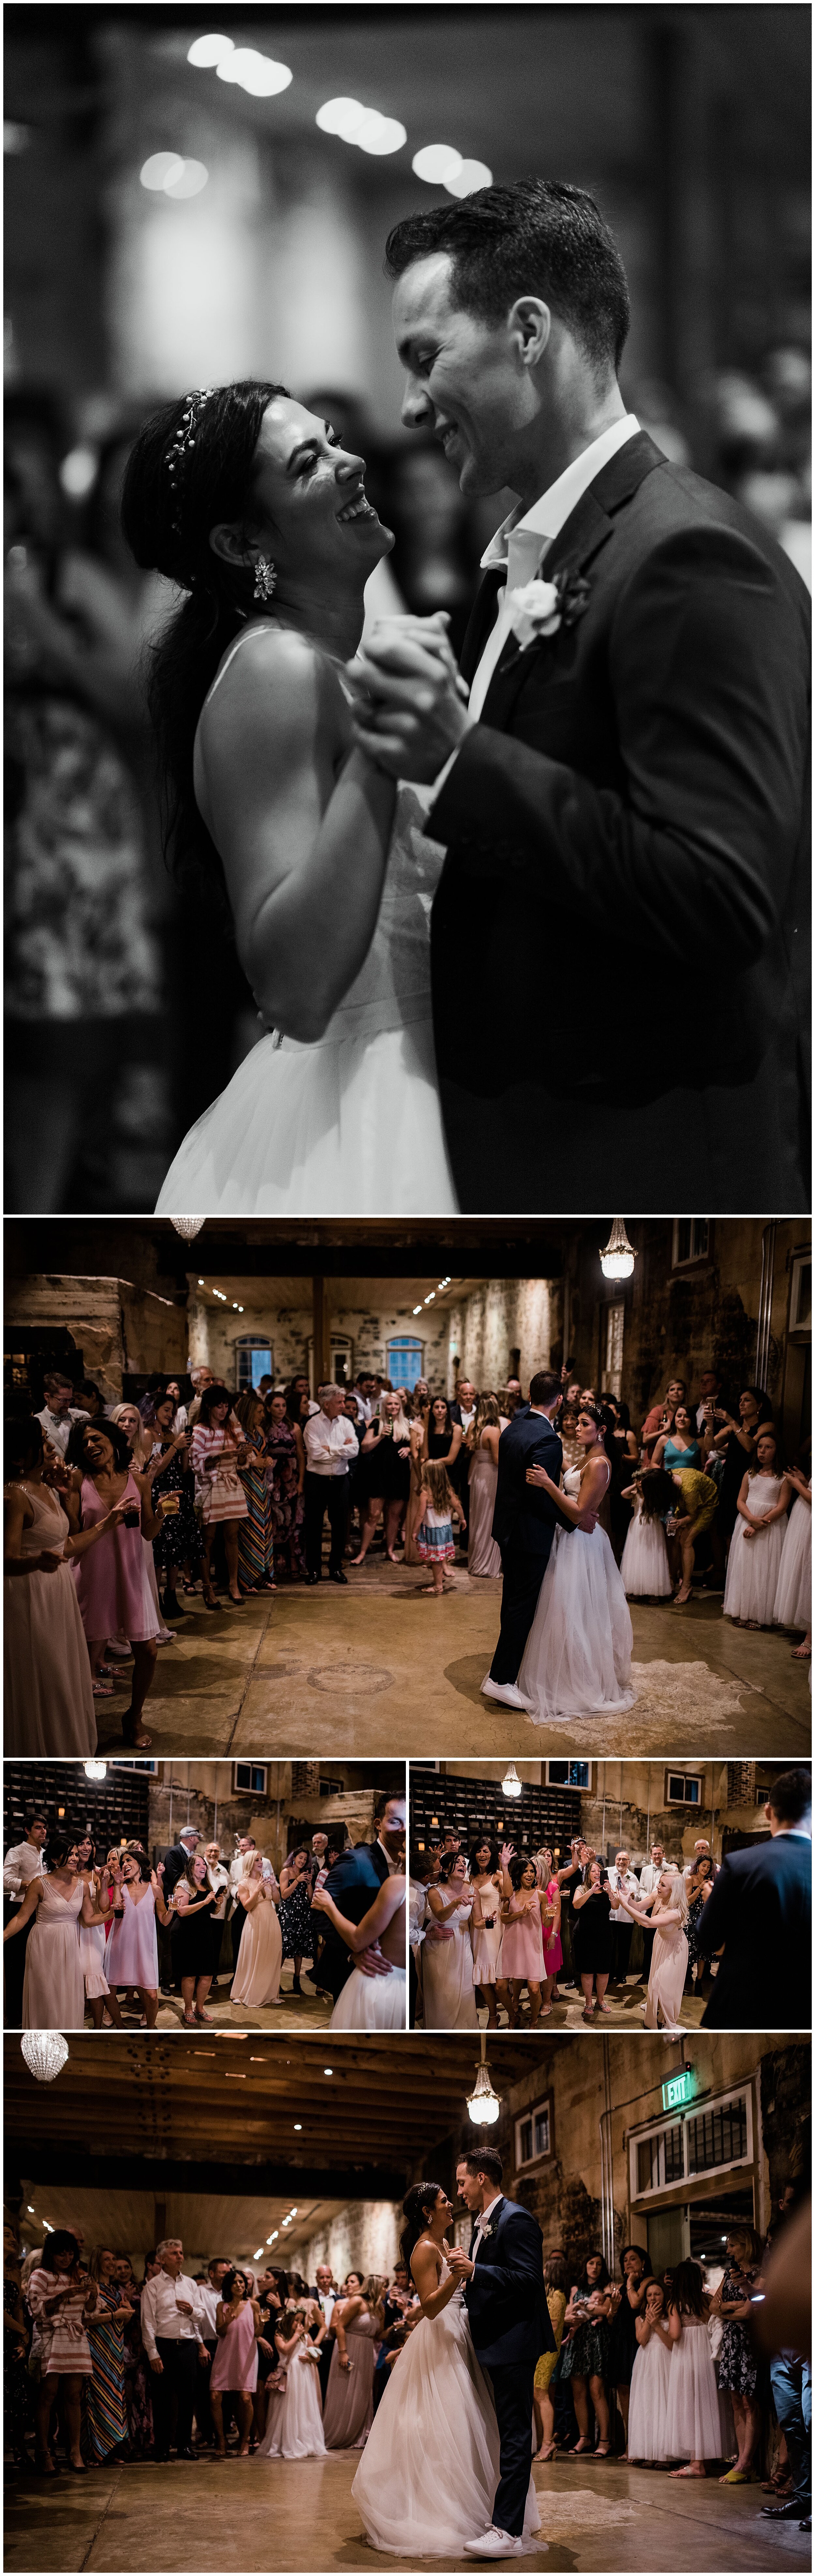  Ingenhuett on High wedding | Dallas wedding photographer | Fort Worth wedding photographer | www.jordanmitchellphotography.com   